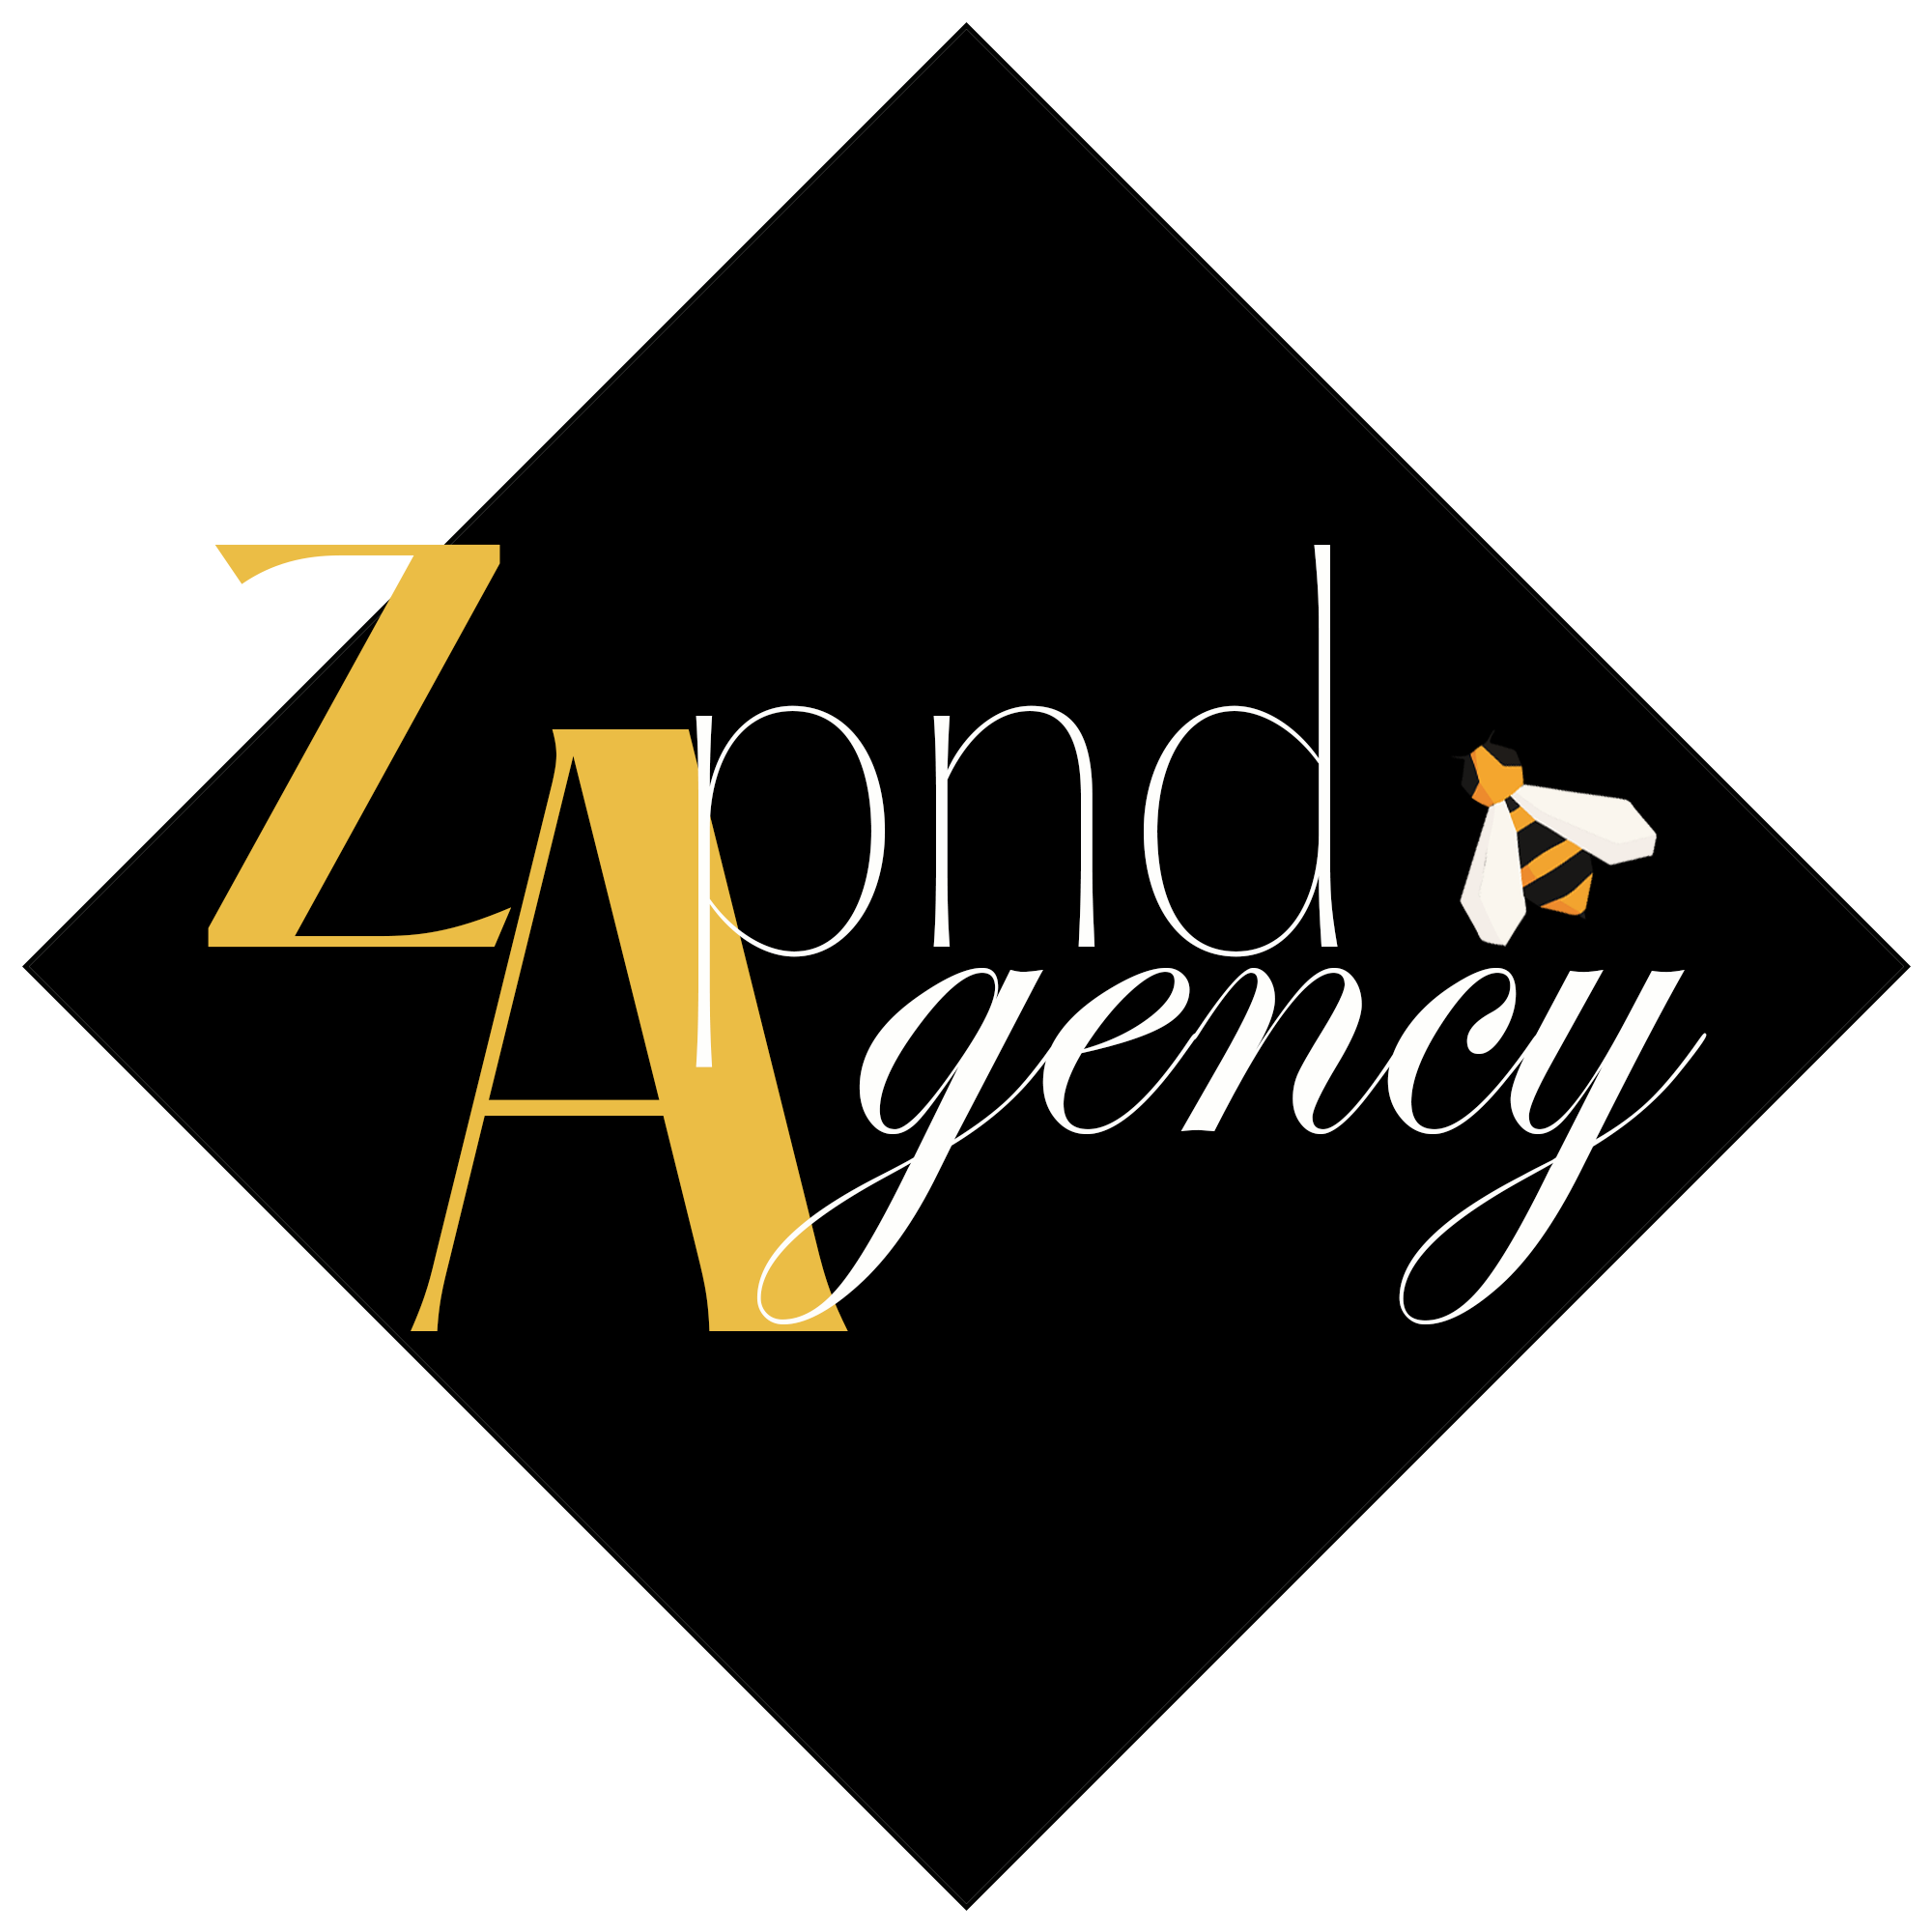 ZPND Agency